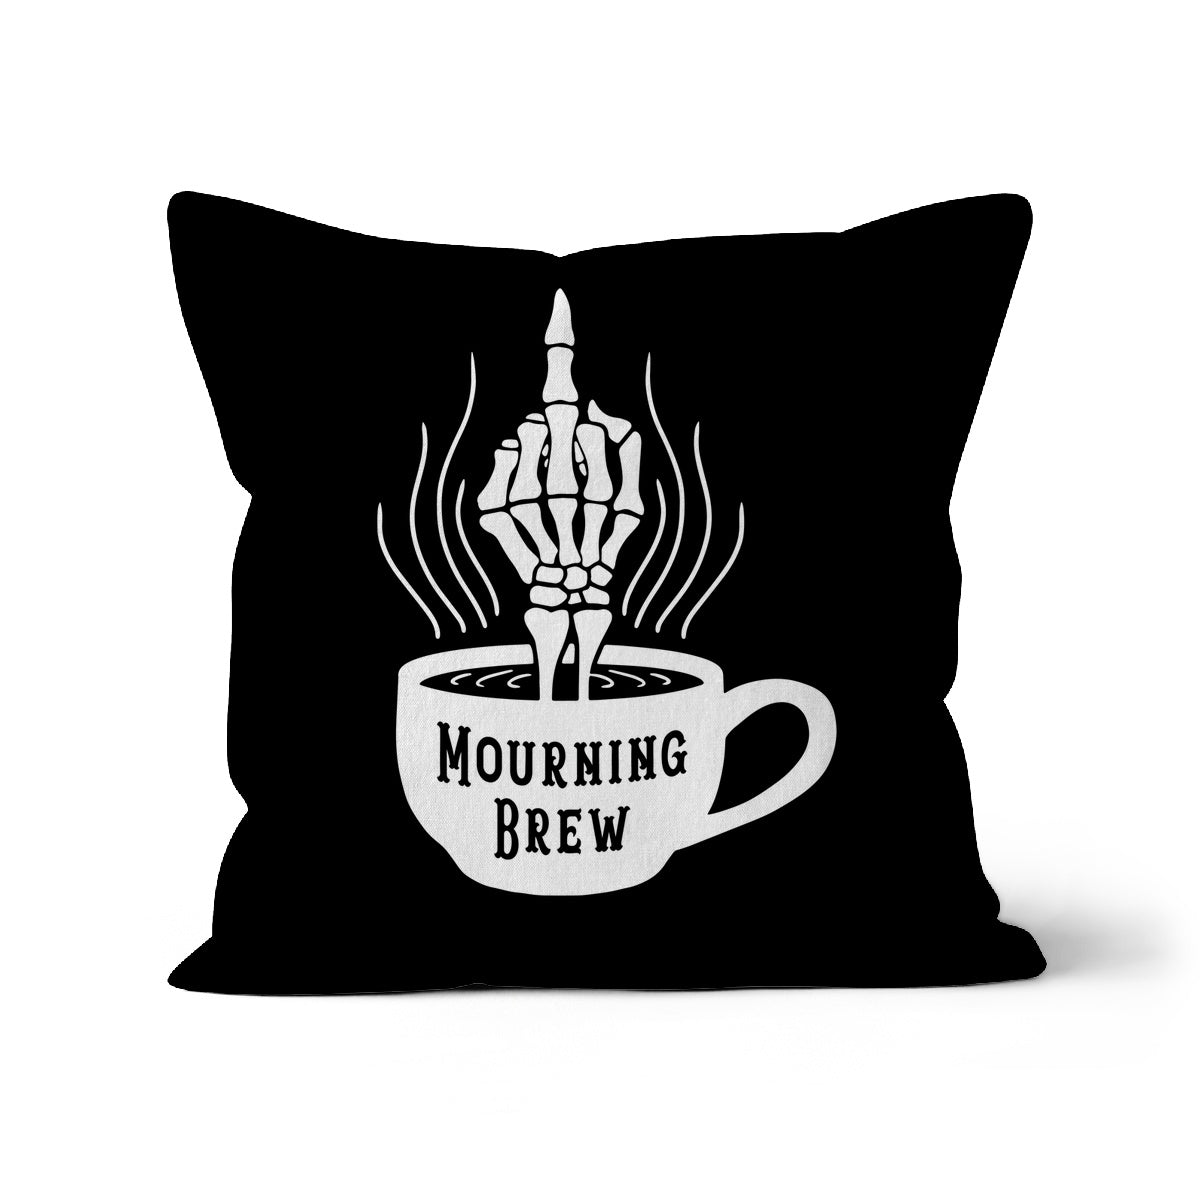 Mourning Brew Cushion - The Gothic Stationery Company - Homeware